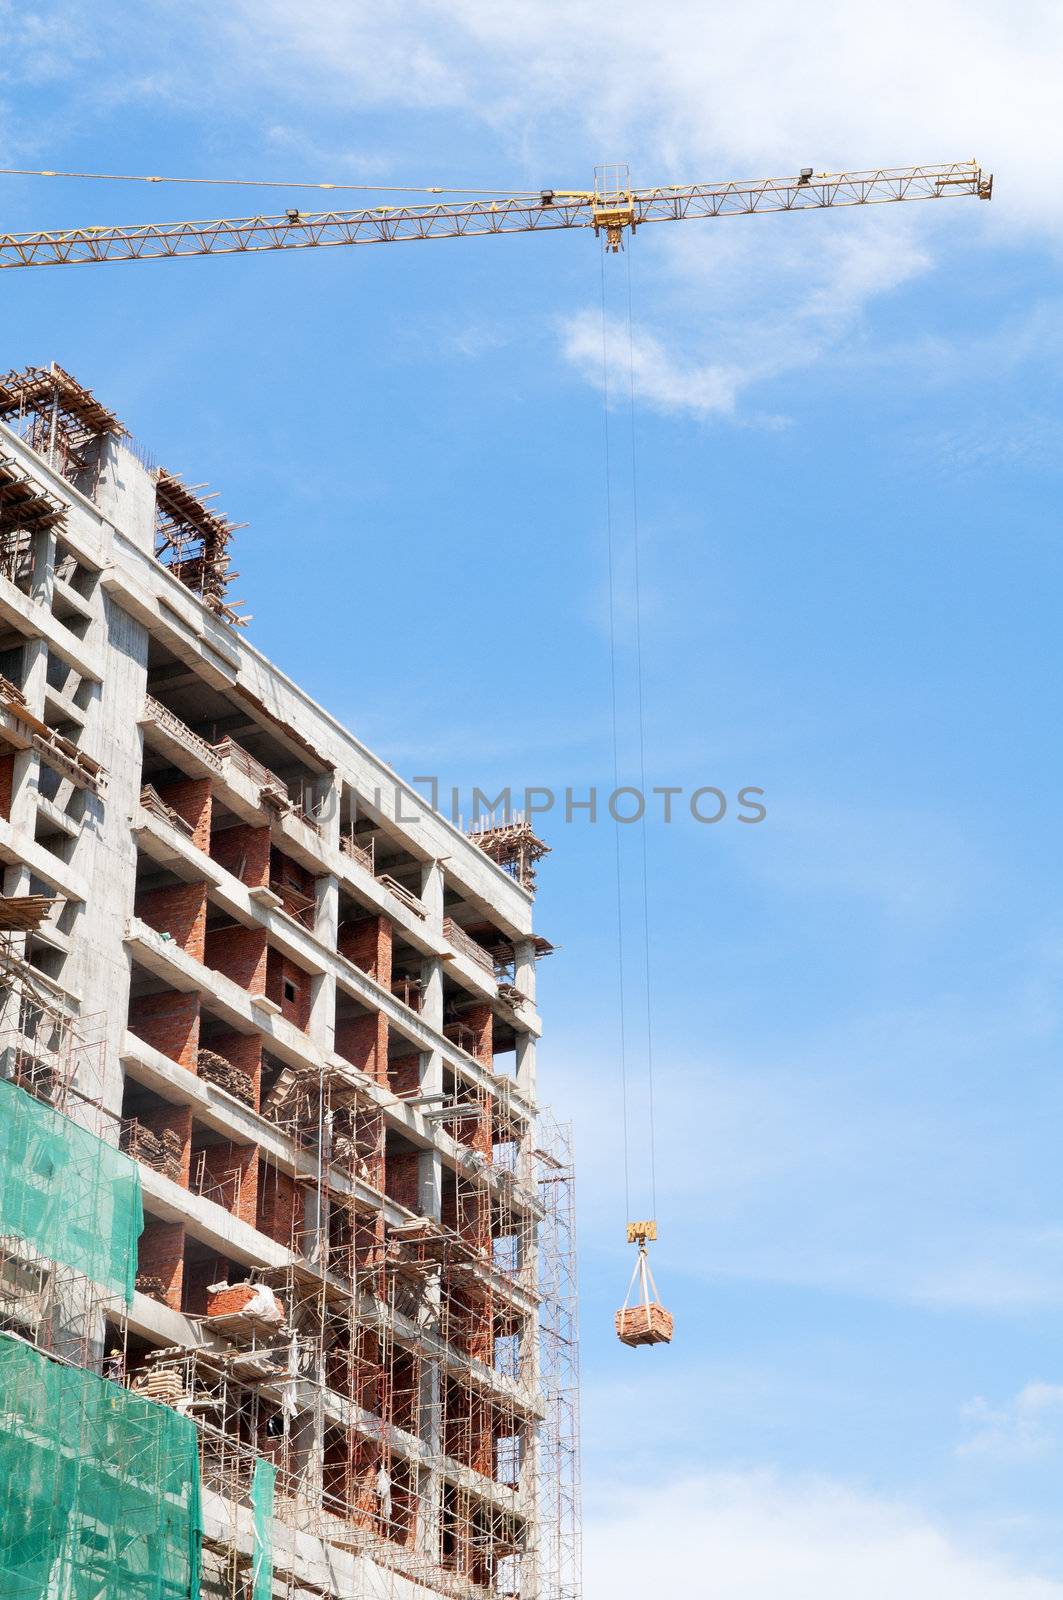 Highrise building under construction with crane against blue sky.